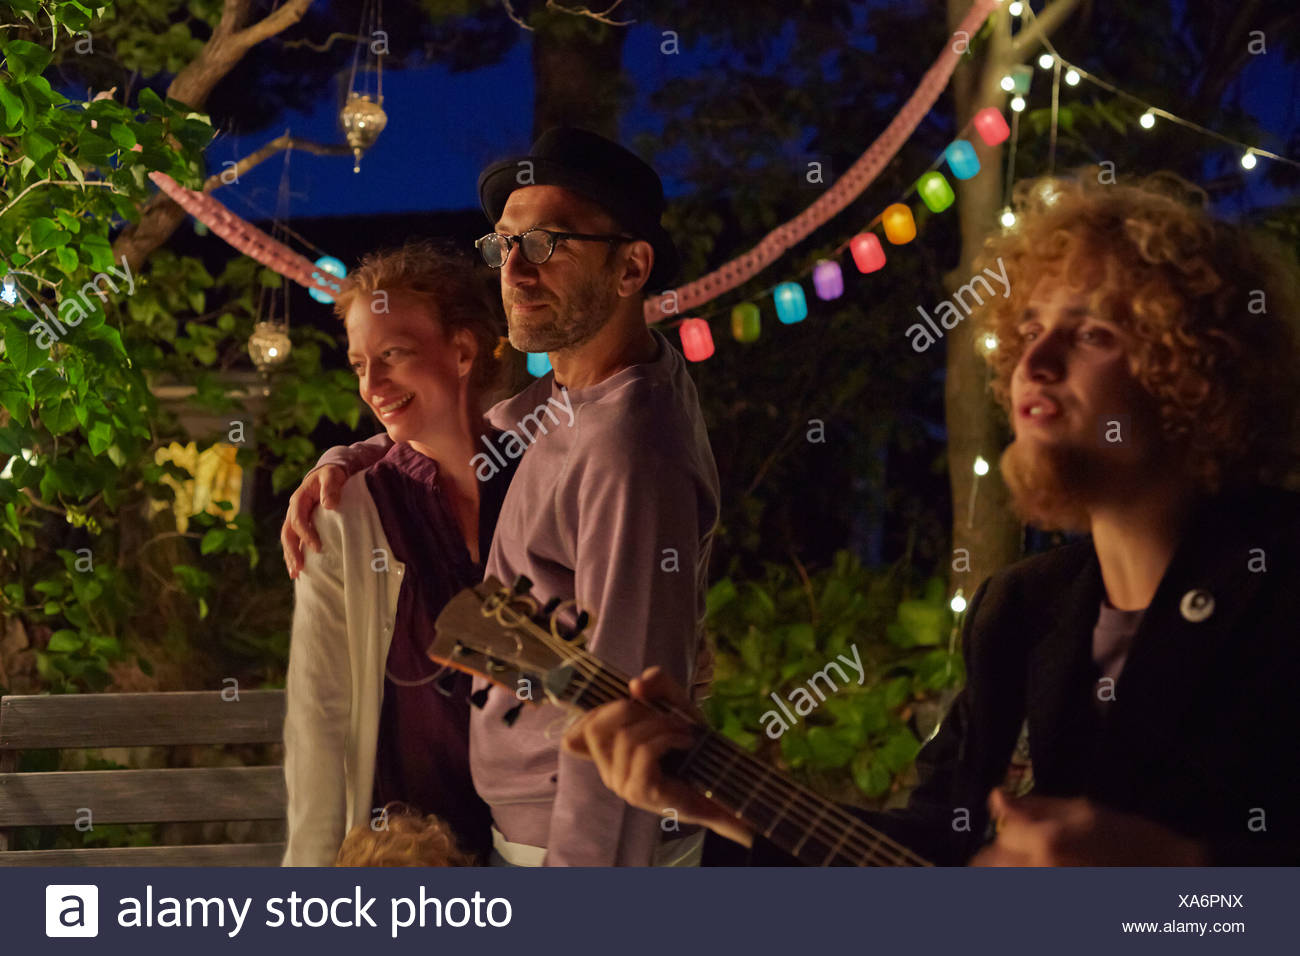 Couple Enjoying Garden Party At Night Stock Photo 281662022 Alamy